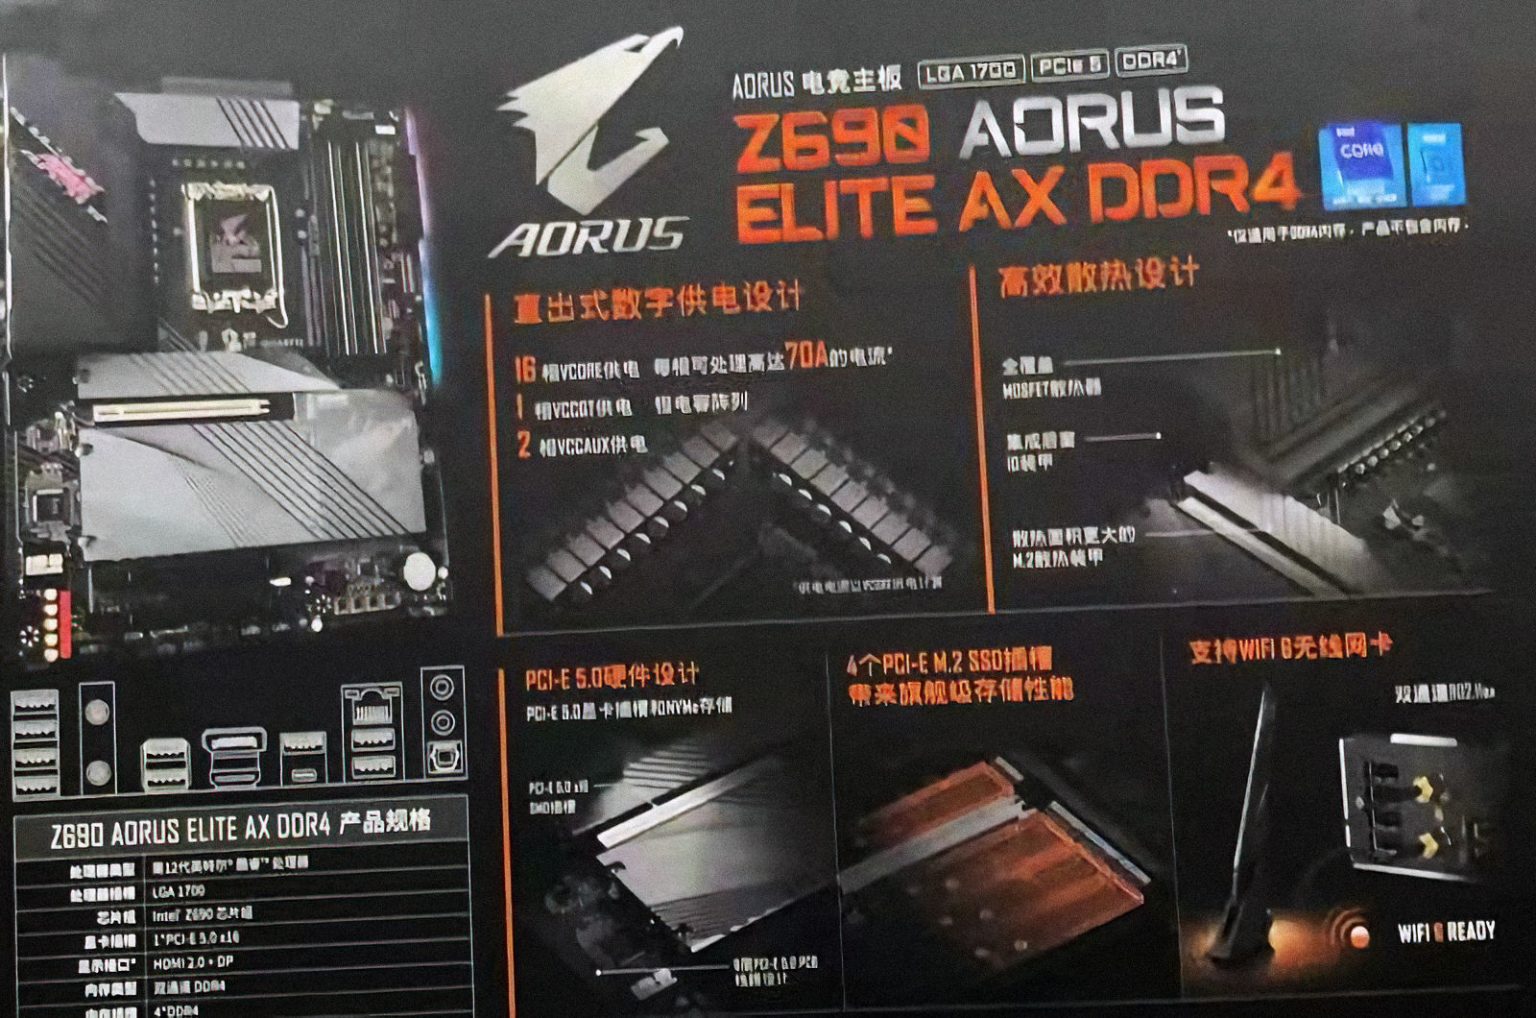 AORUS-Z690-ELITE-AX-DDR4-1536x1018.jpg